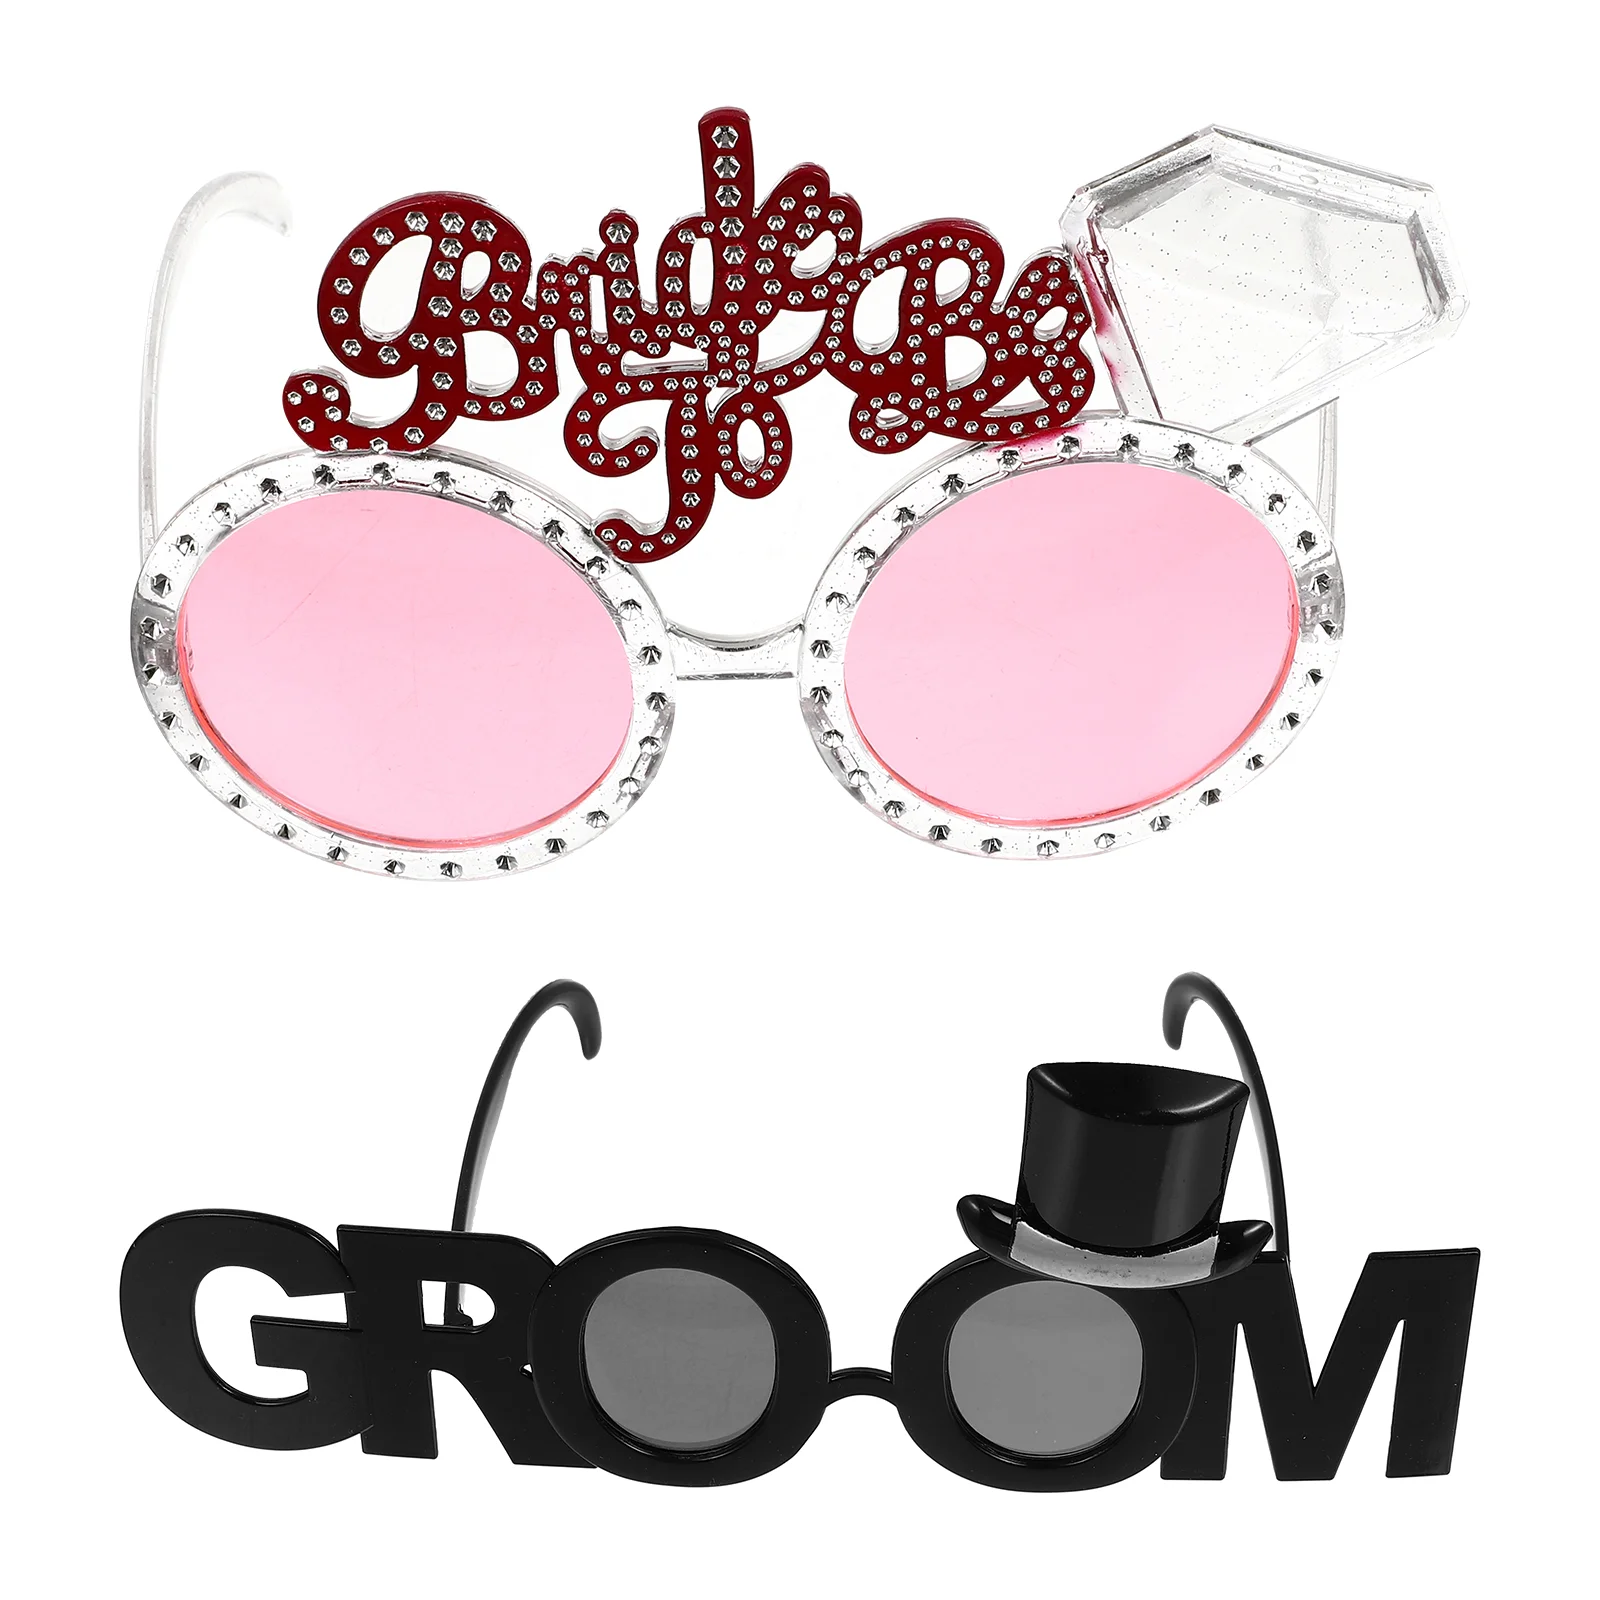 

Sunglasses Eyeglasses Glasses Party Bride Bachelorette Groom Wedding Novelty Silly Funny Hawaiian Eyewear Fillers Supplies Props